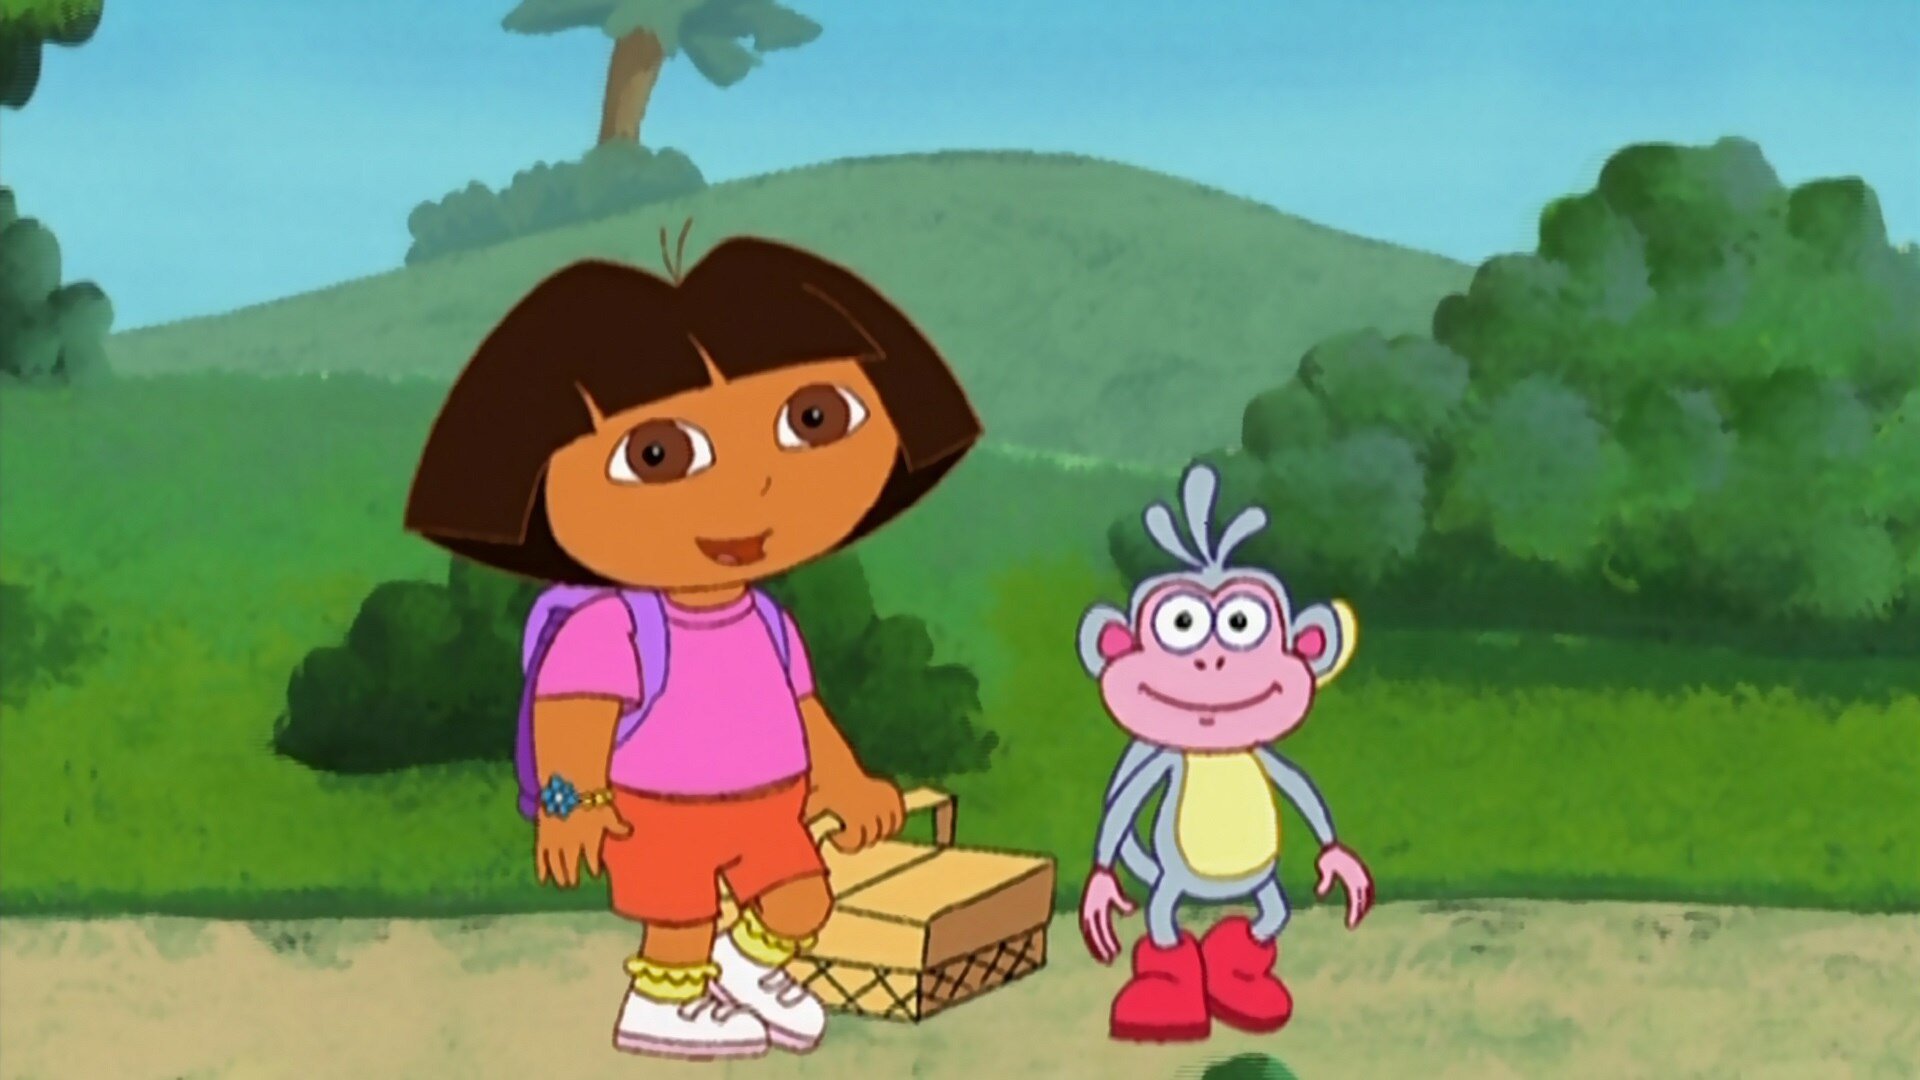 Watch Dora the Explorer Season 1 Episode 12 Online - Stream Full Episodes